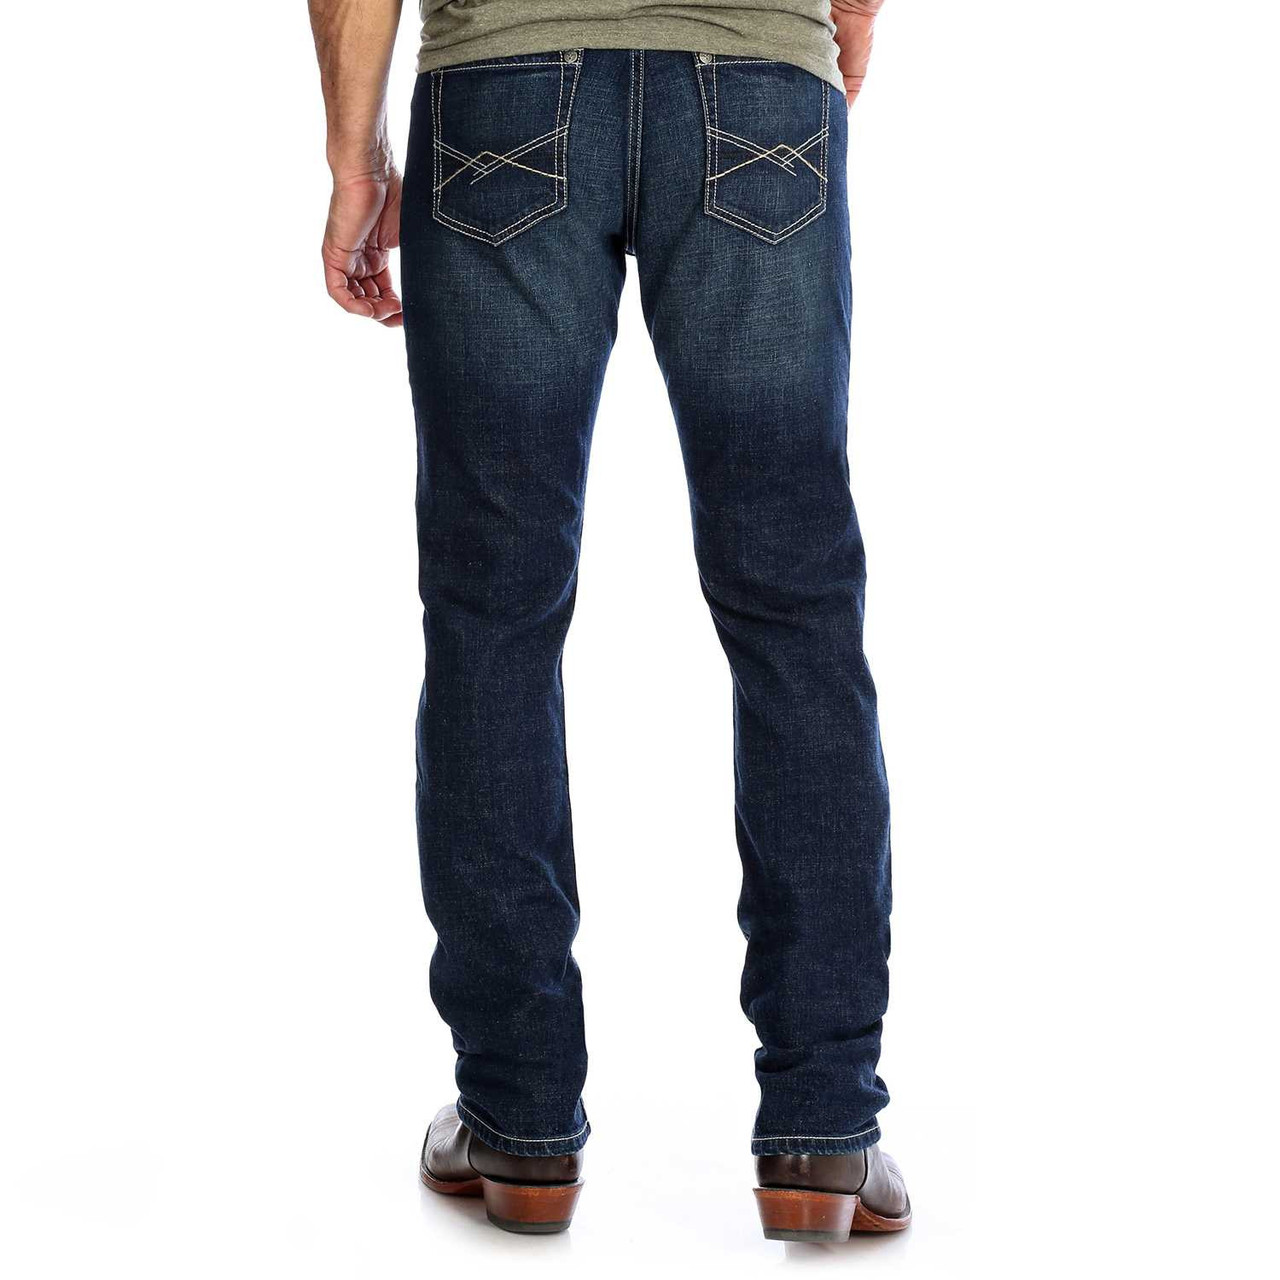 wrangler slim stretch jeans